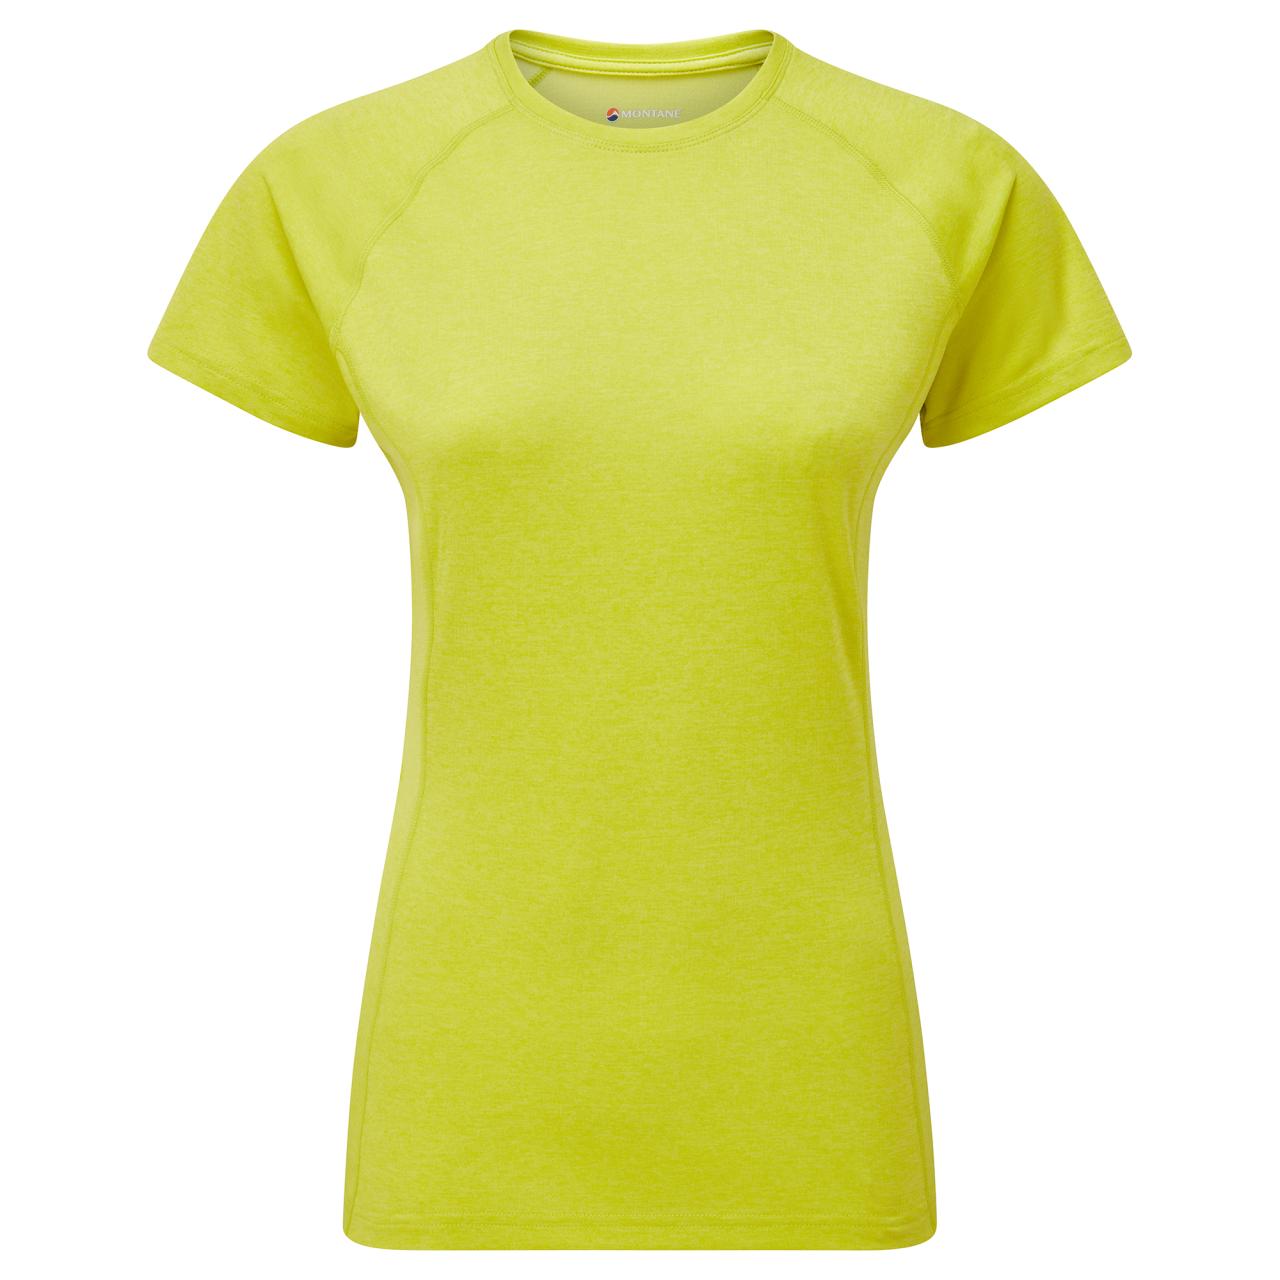 FEM DART T-SHIRT-CITRUS SPRING-UK10/S dámské triko žlutozelené